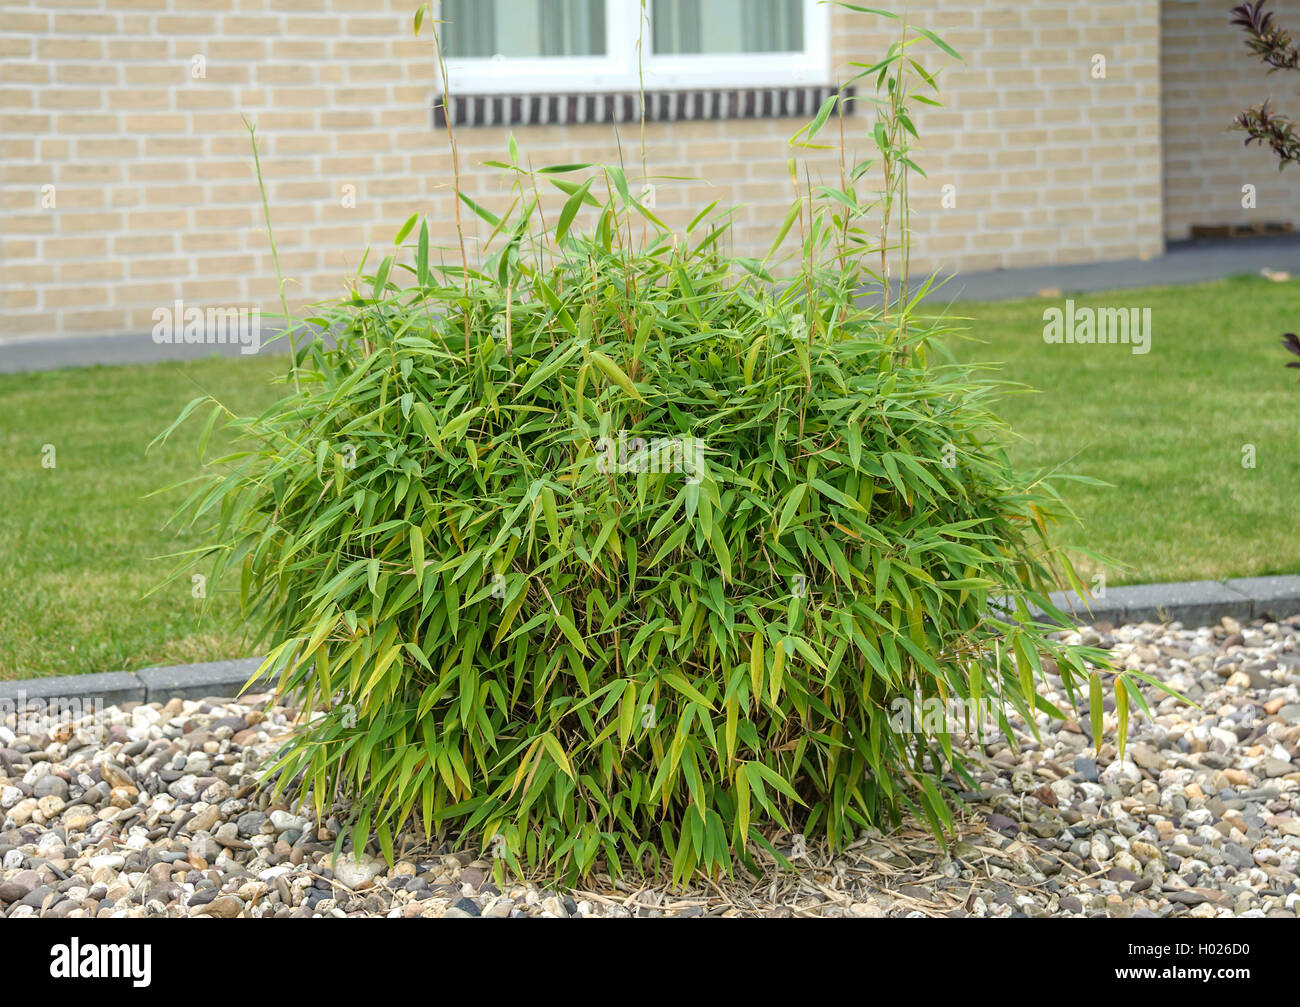 hoesten Klimatologische bergen Manie bamboo (Fargesia murieliae 'Simba', Fargesia murieliae Simba), cultivar  Simba Stock Photo - Alamy